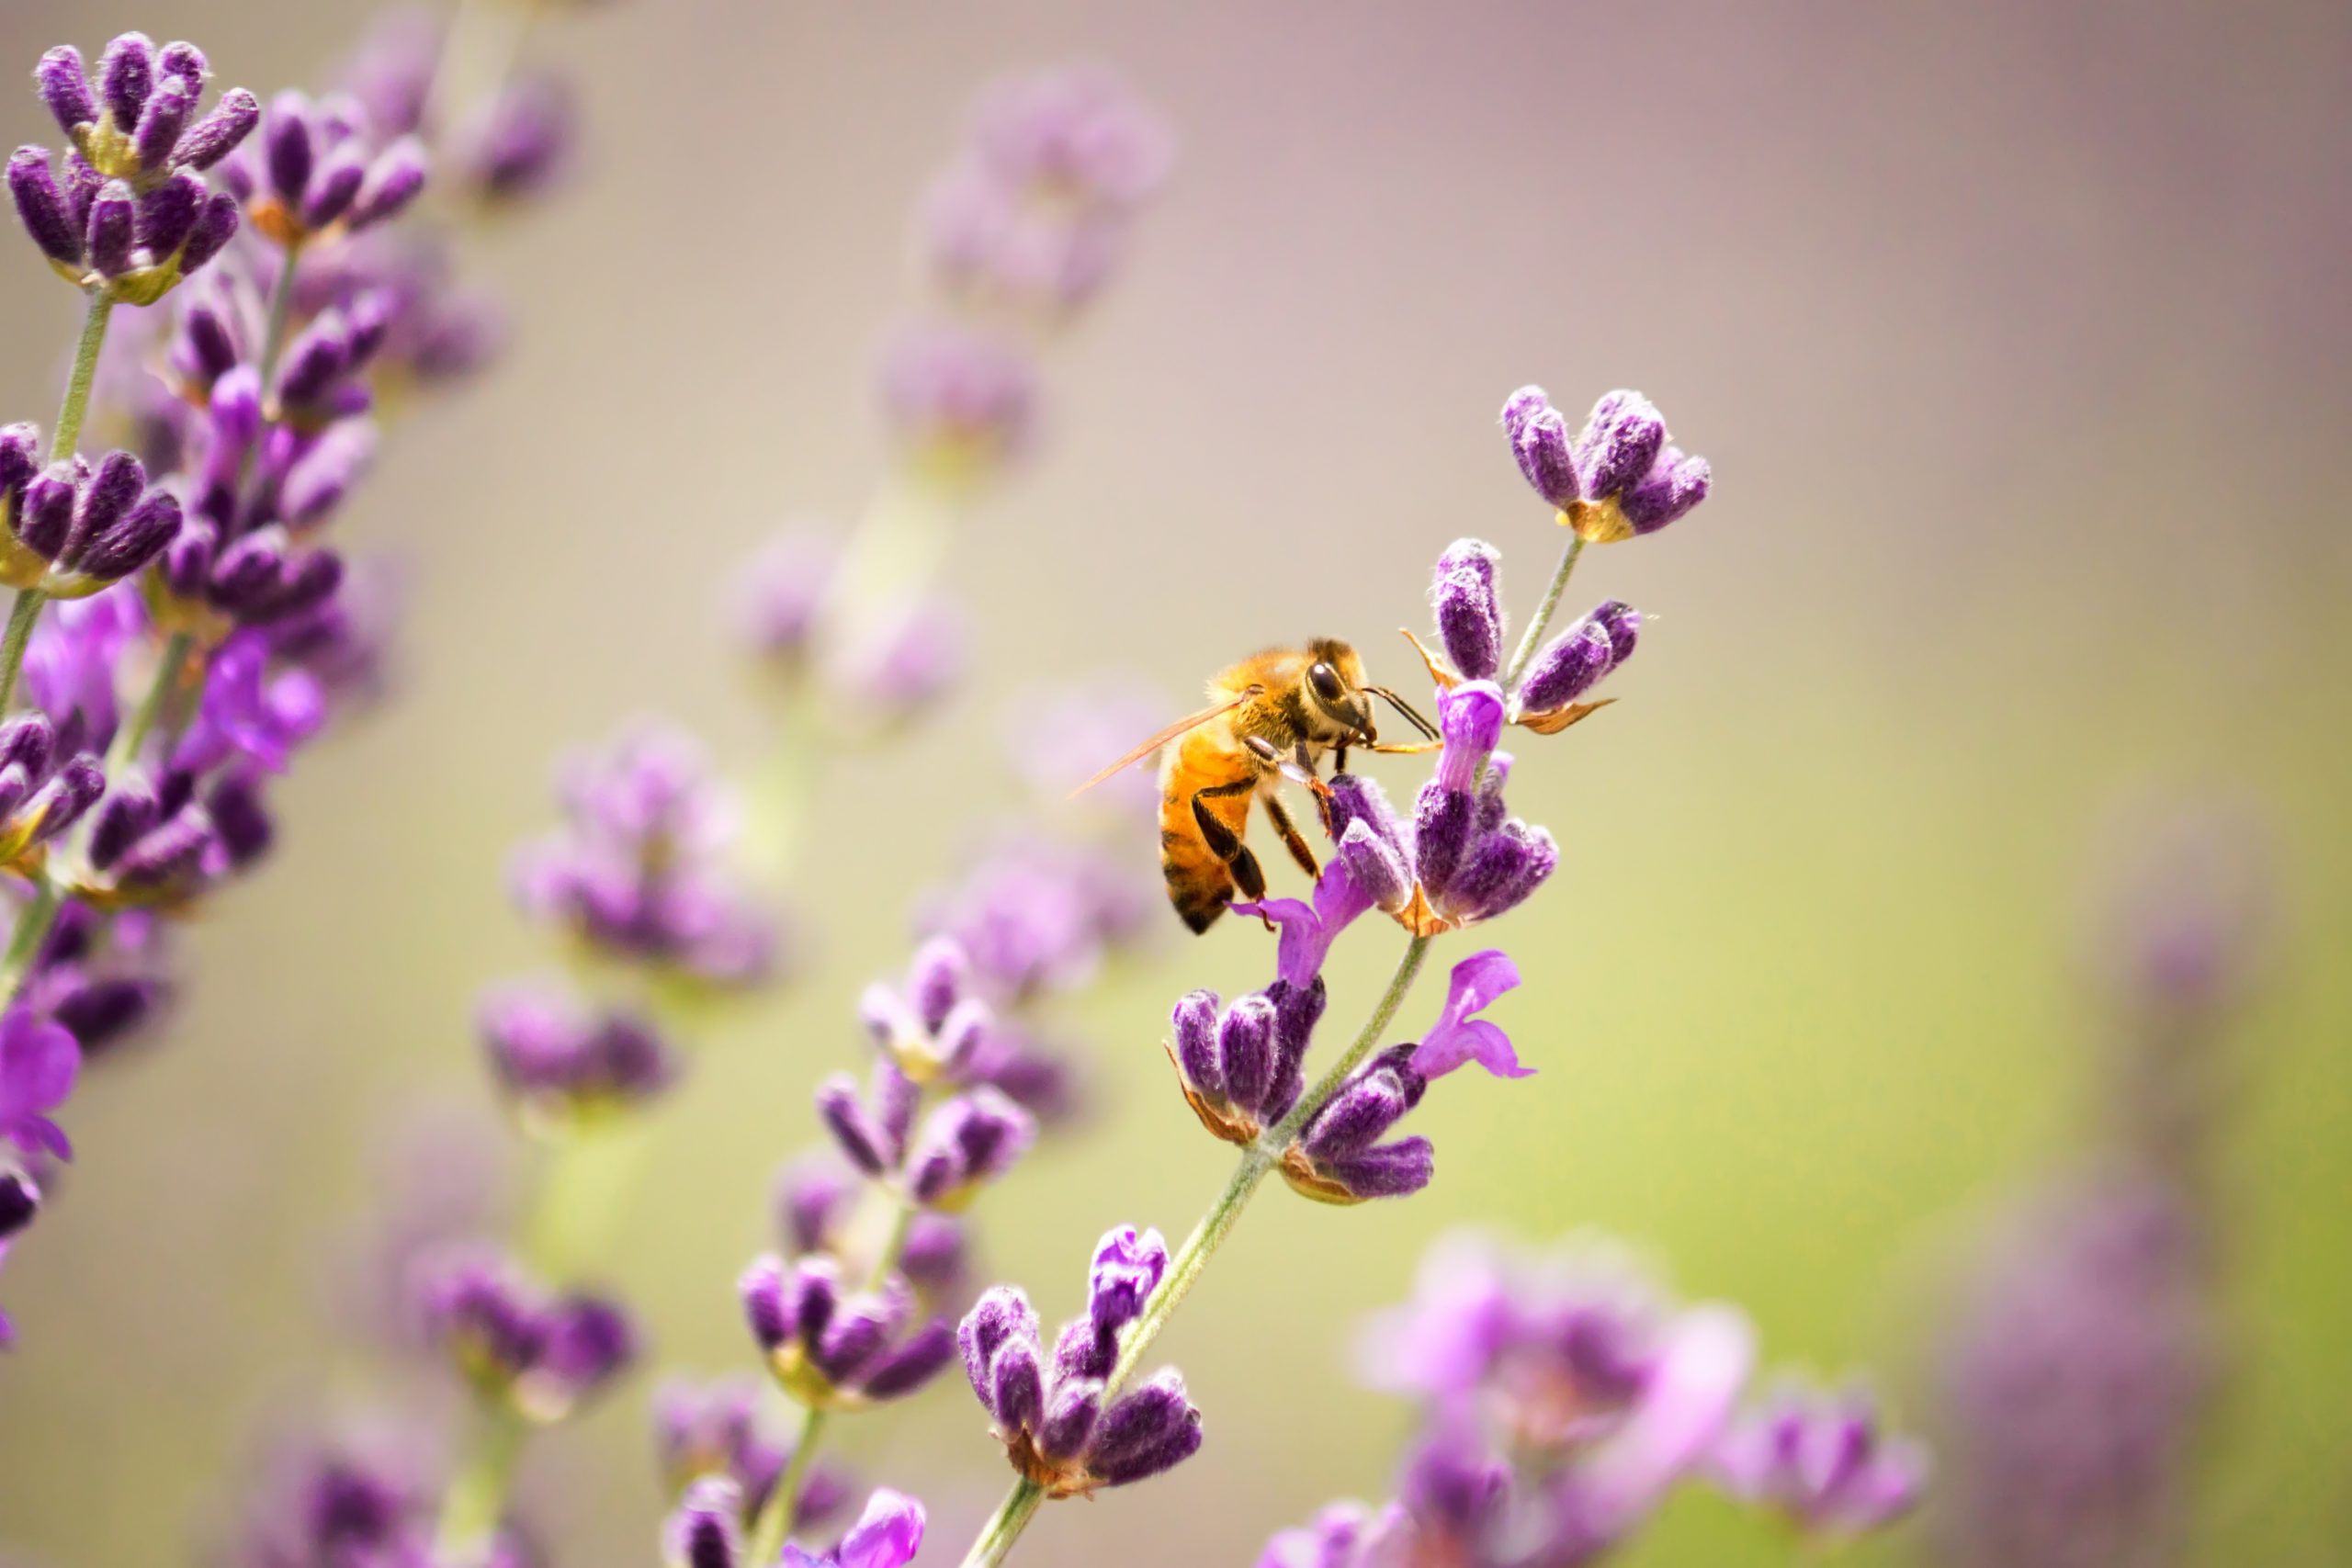 Student Studying Allergies Through Bee Pollen